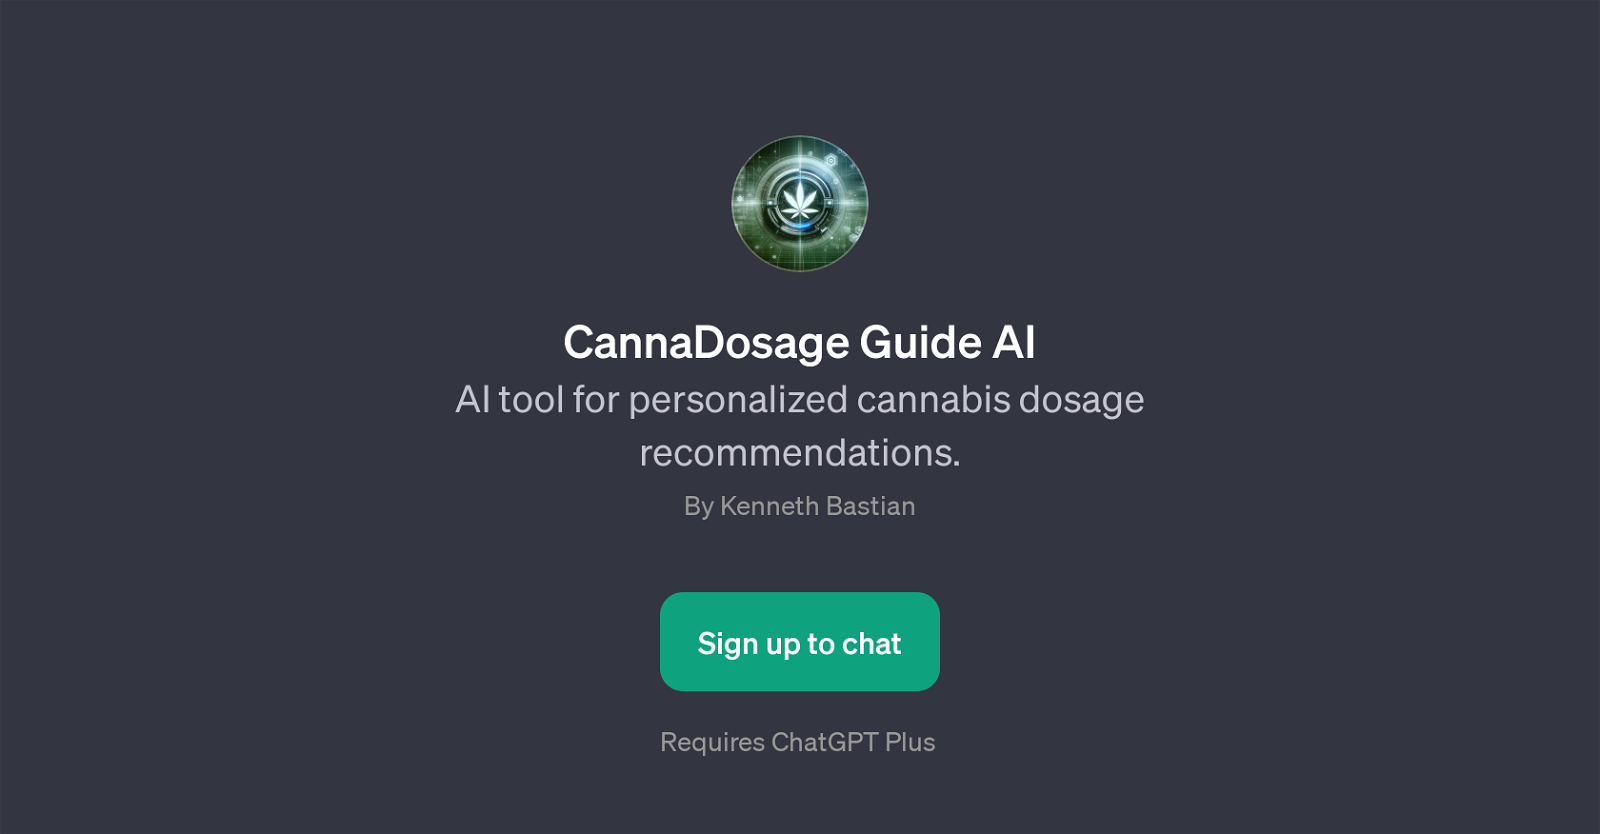 CannaDosage Guide AI website